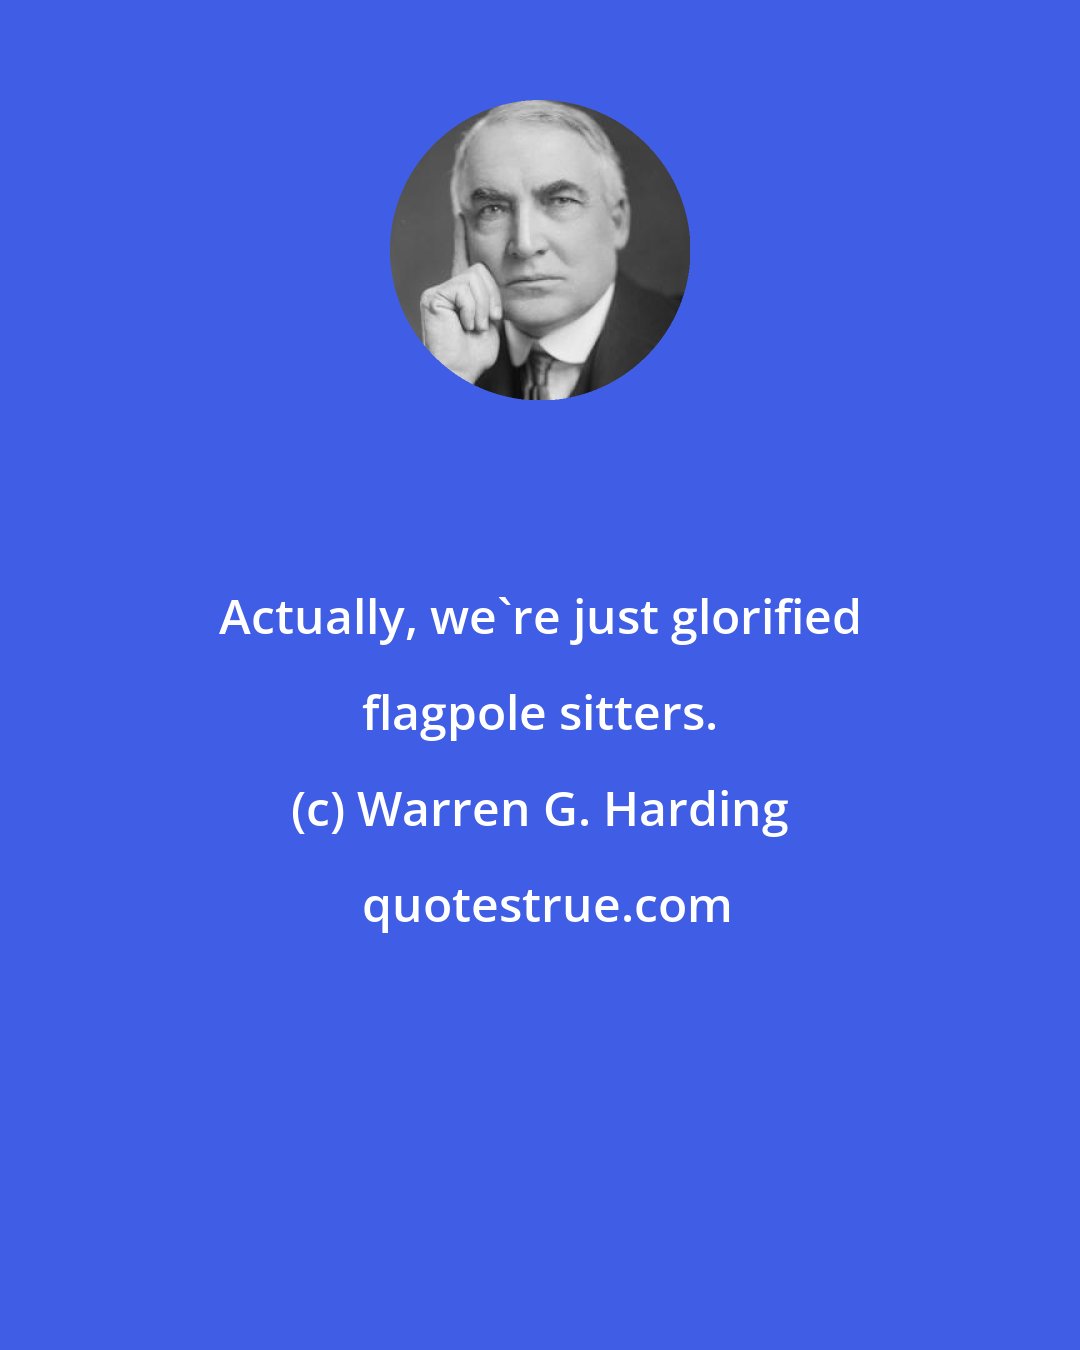 Warren G. Harding: Actually, we're just glorified flagpole sitters.